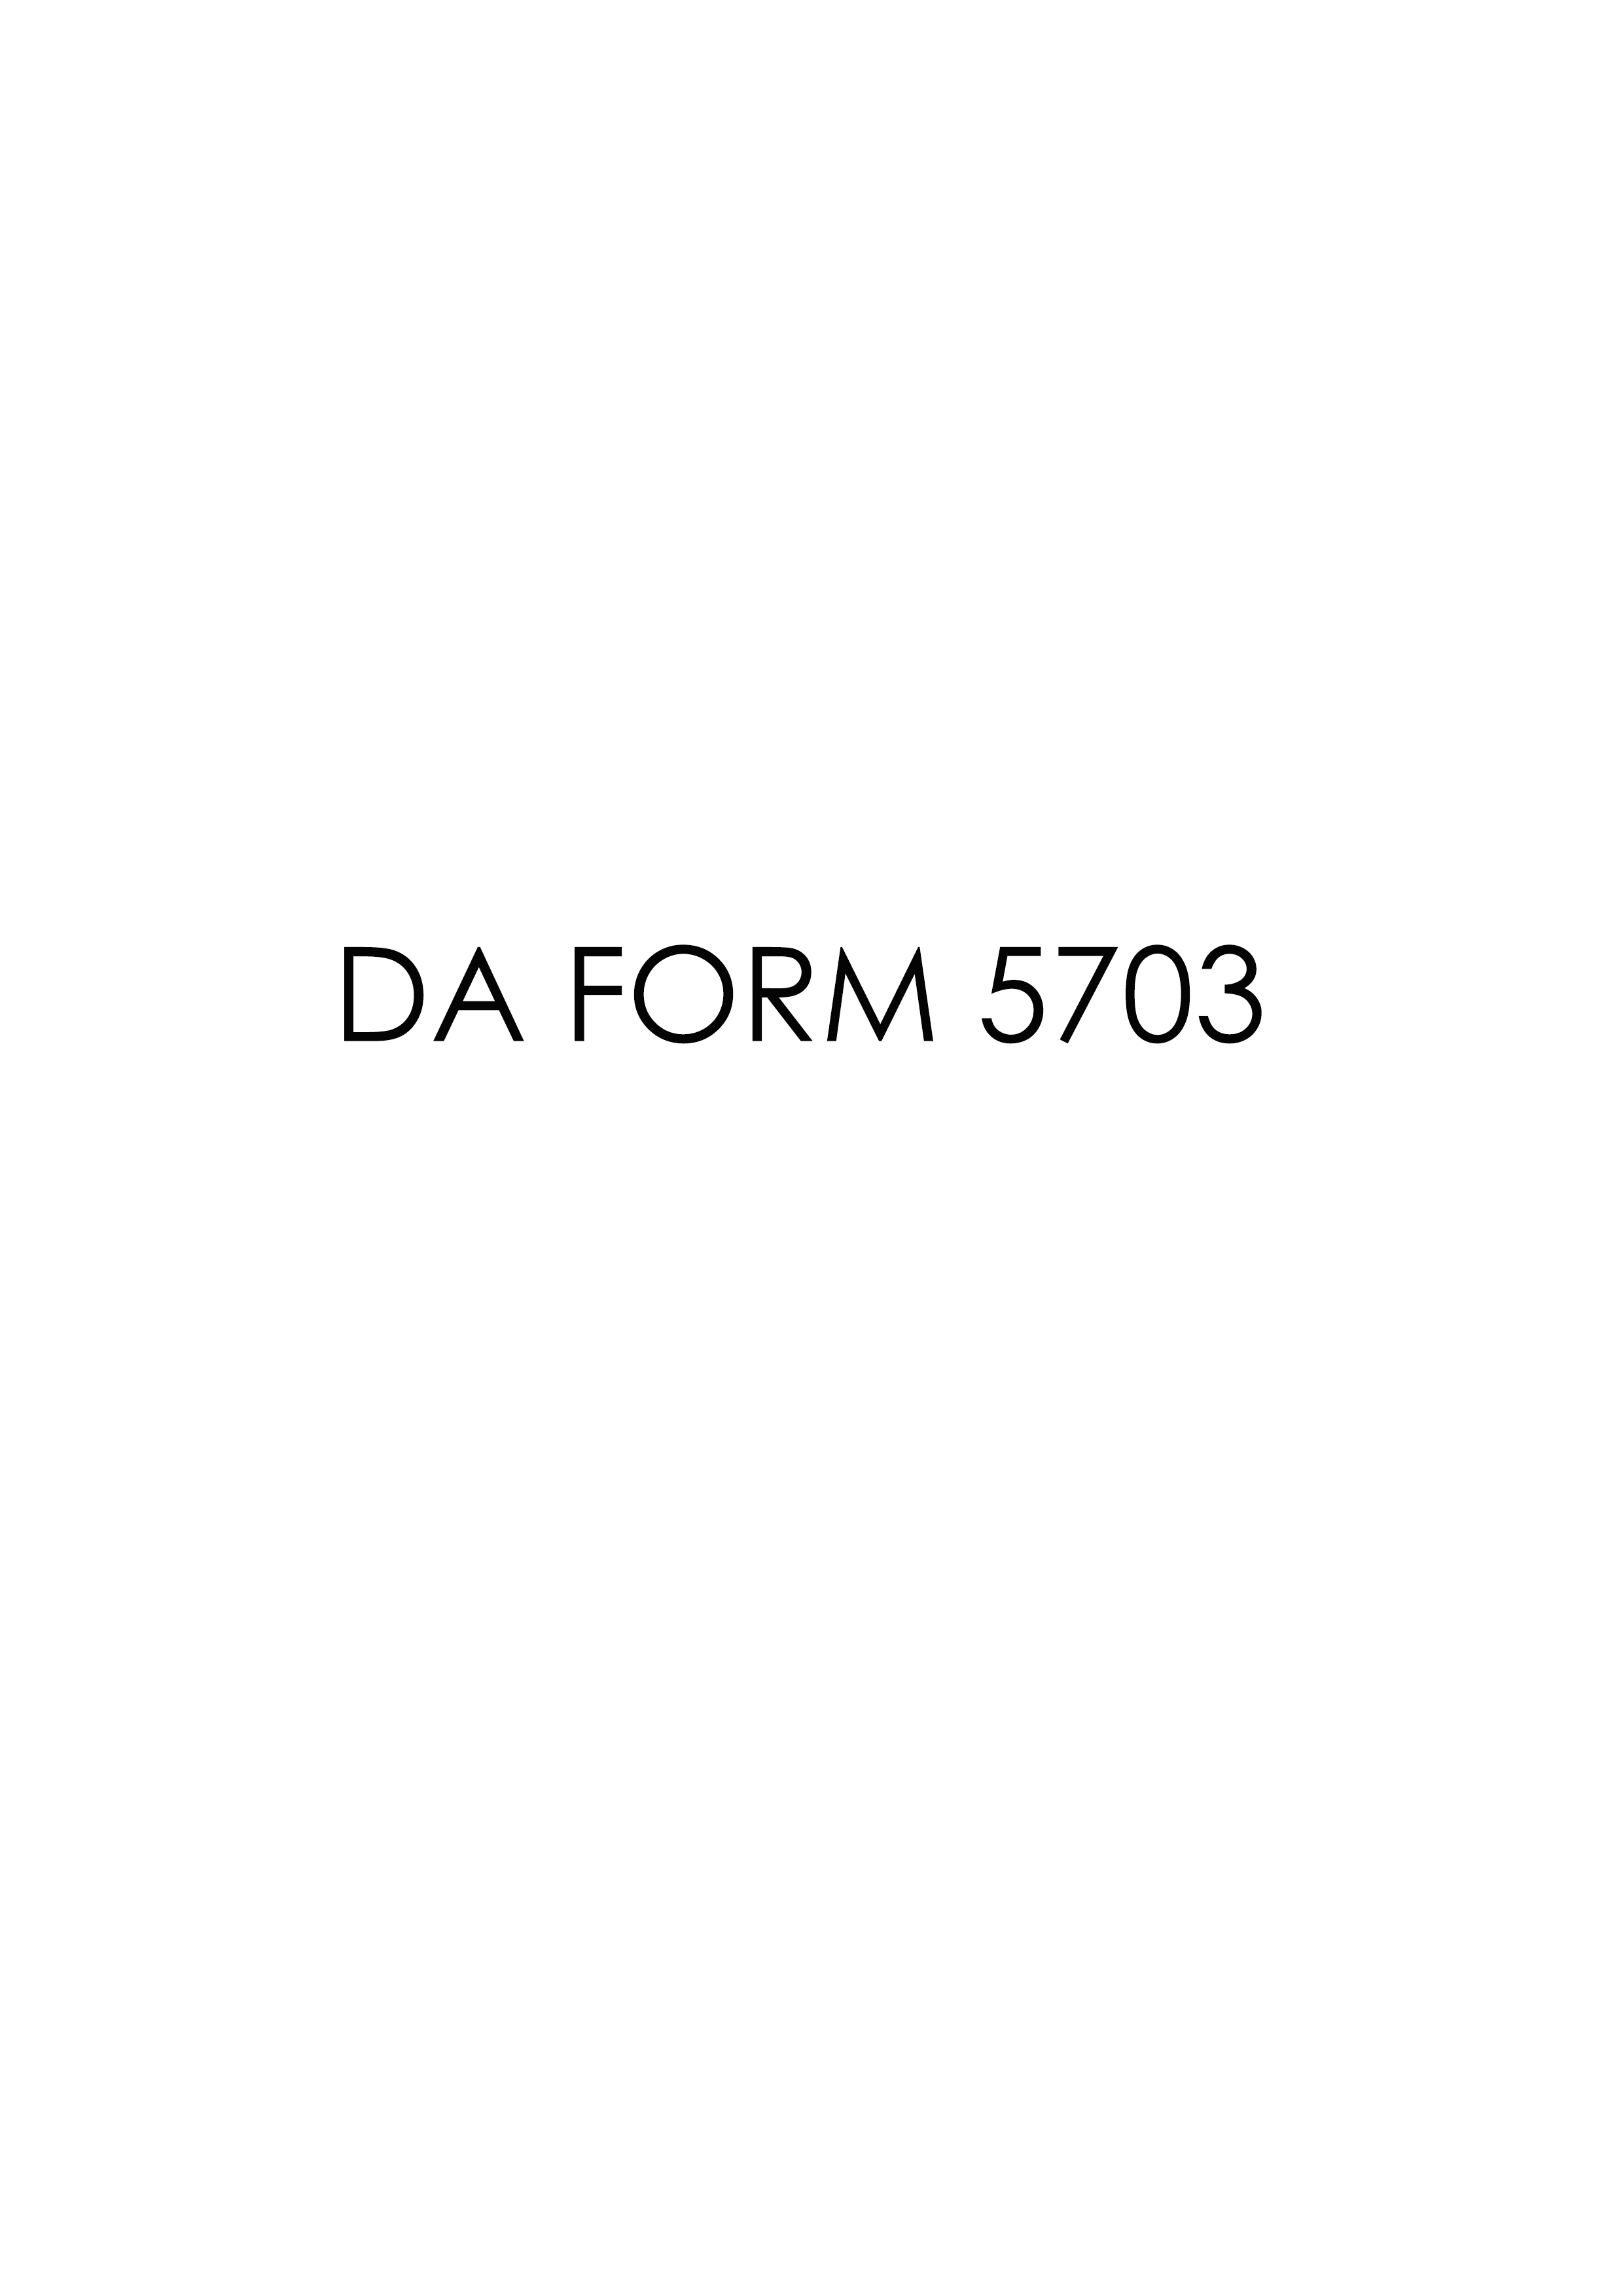 da Form 5703 fillable